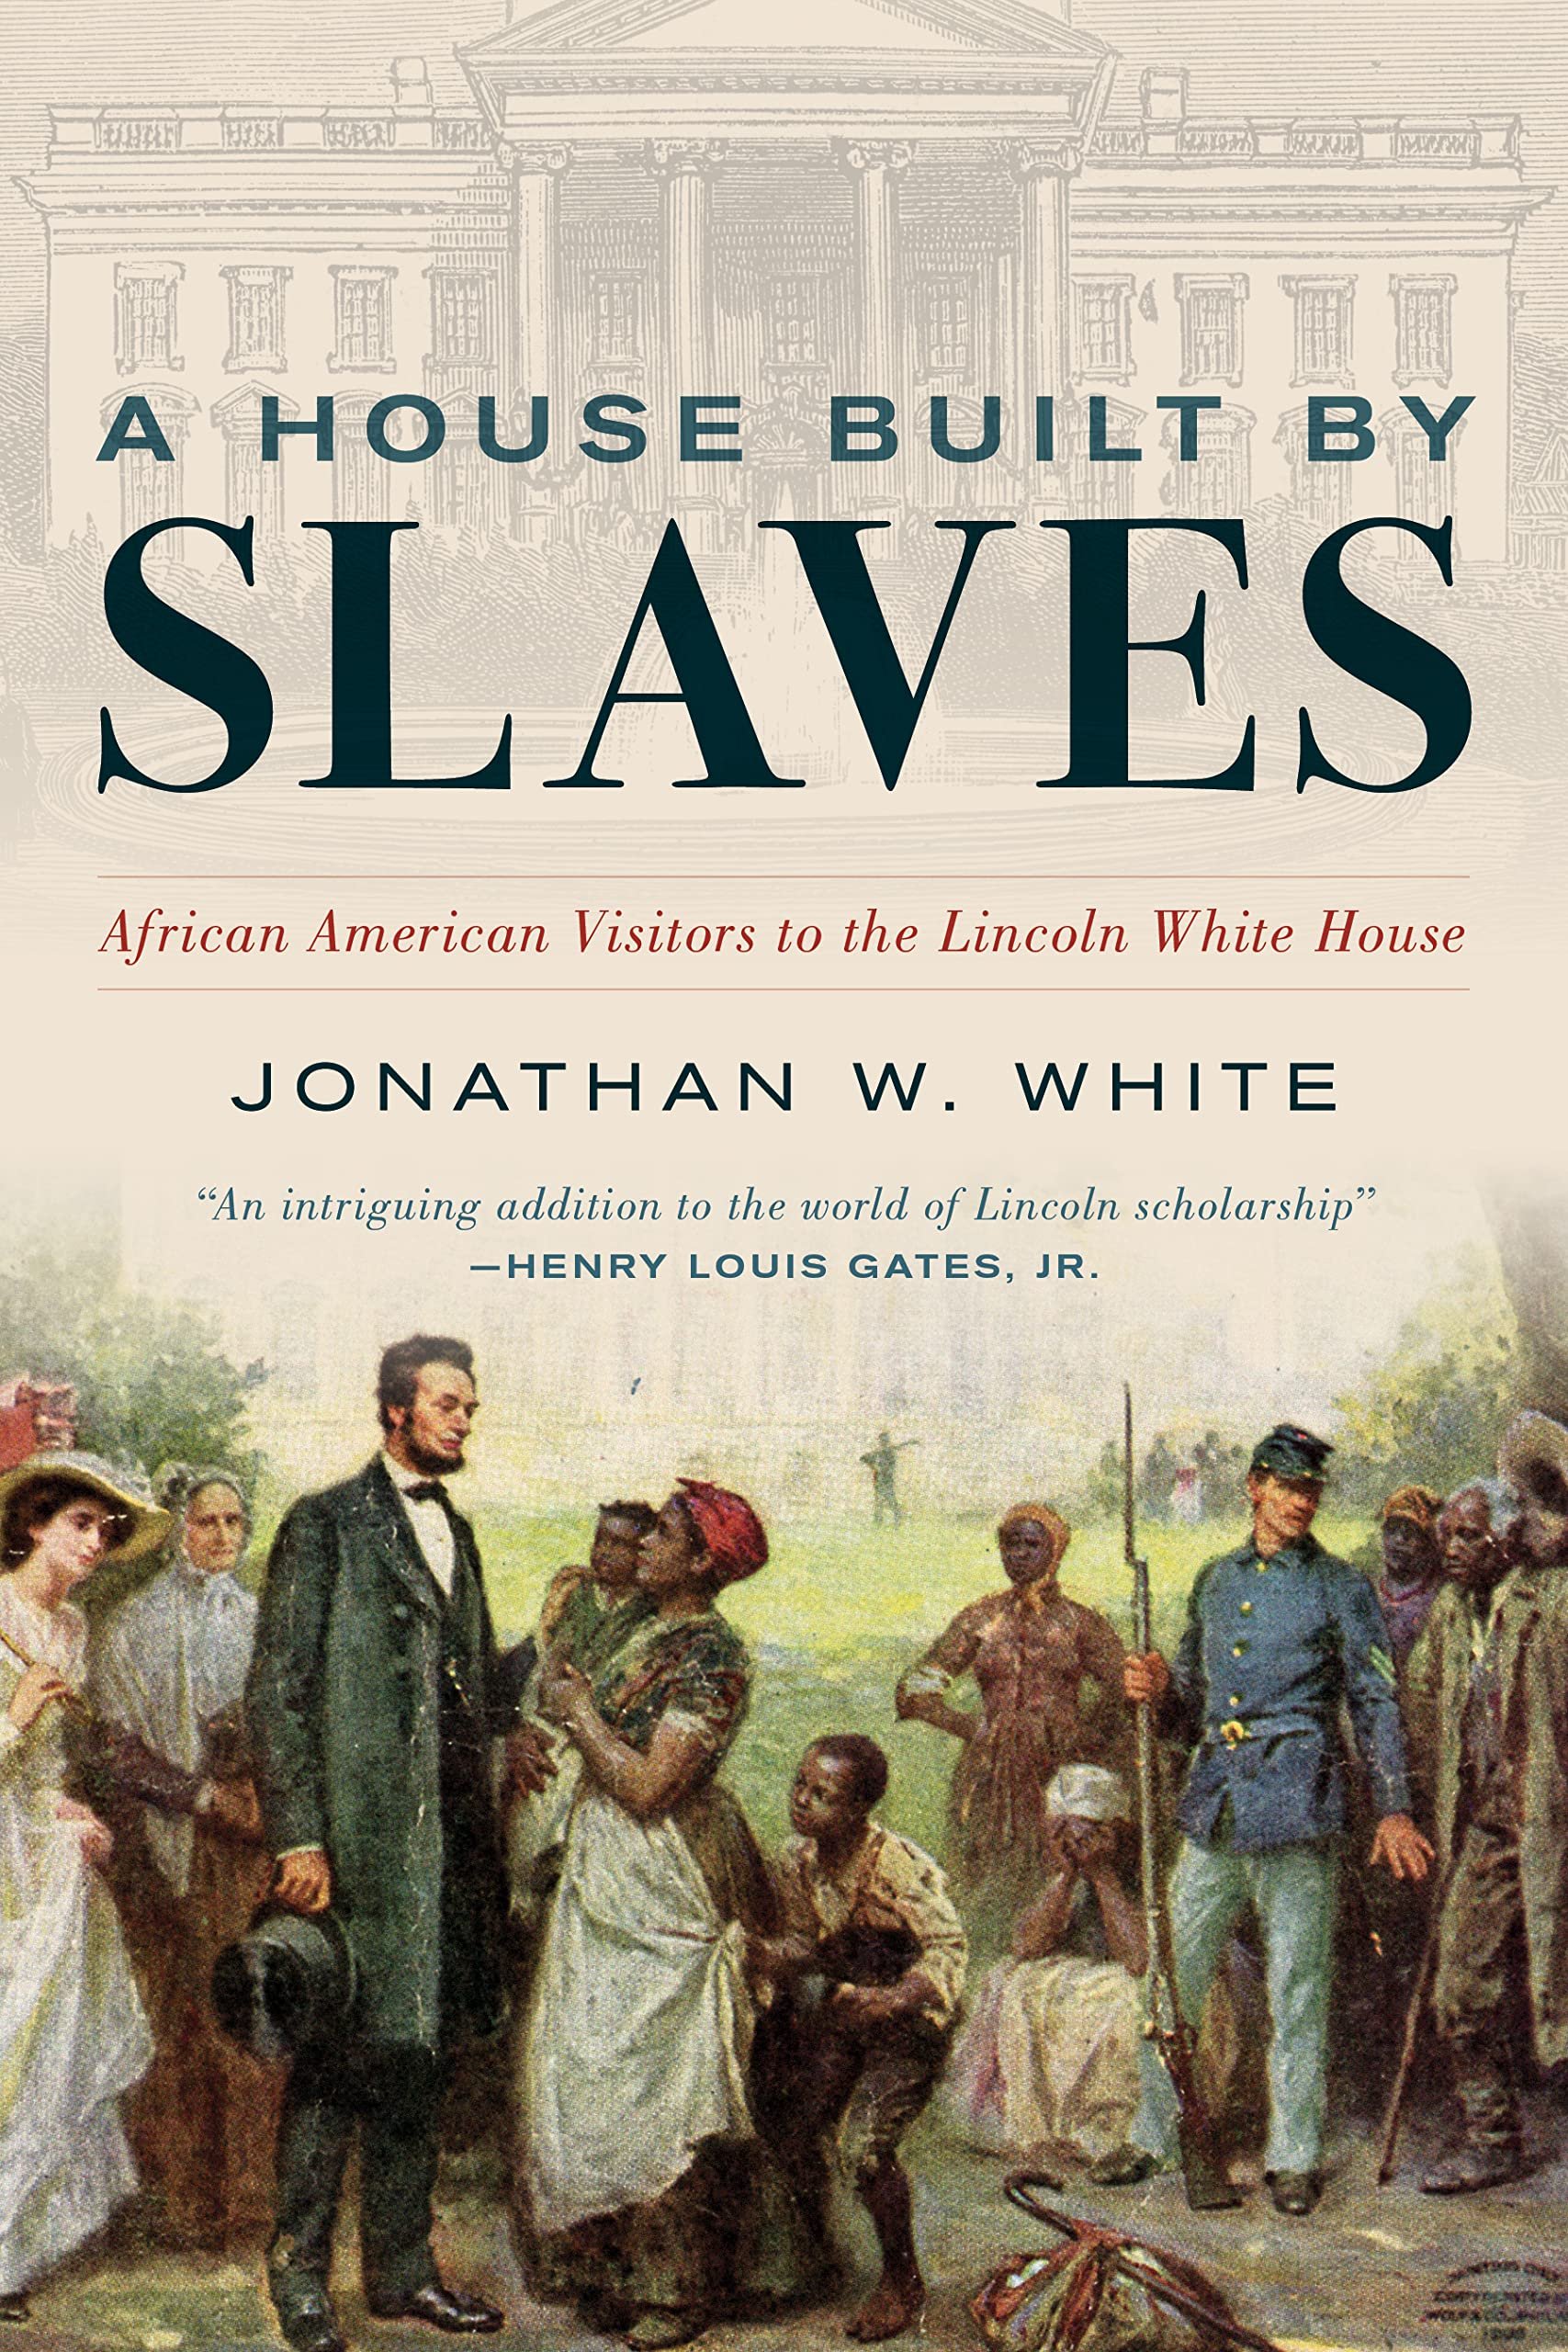 Civil War Monitor - A House Built By Slaves (Jonathan White)